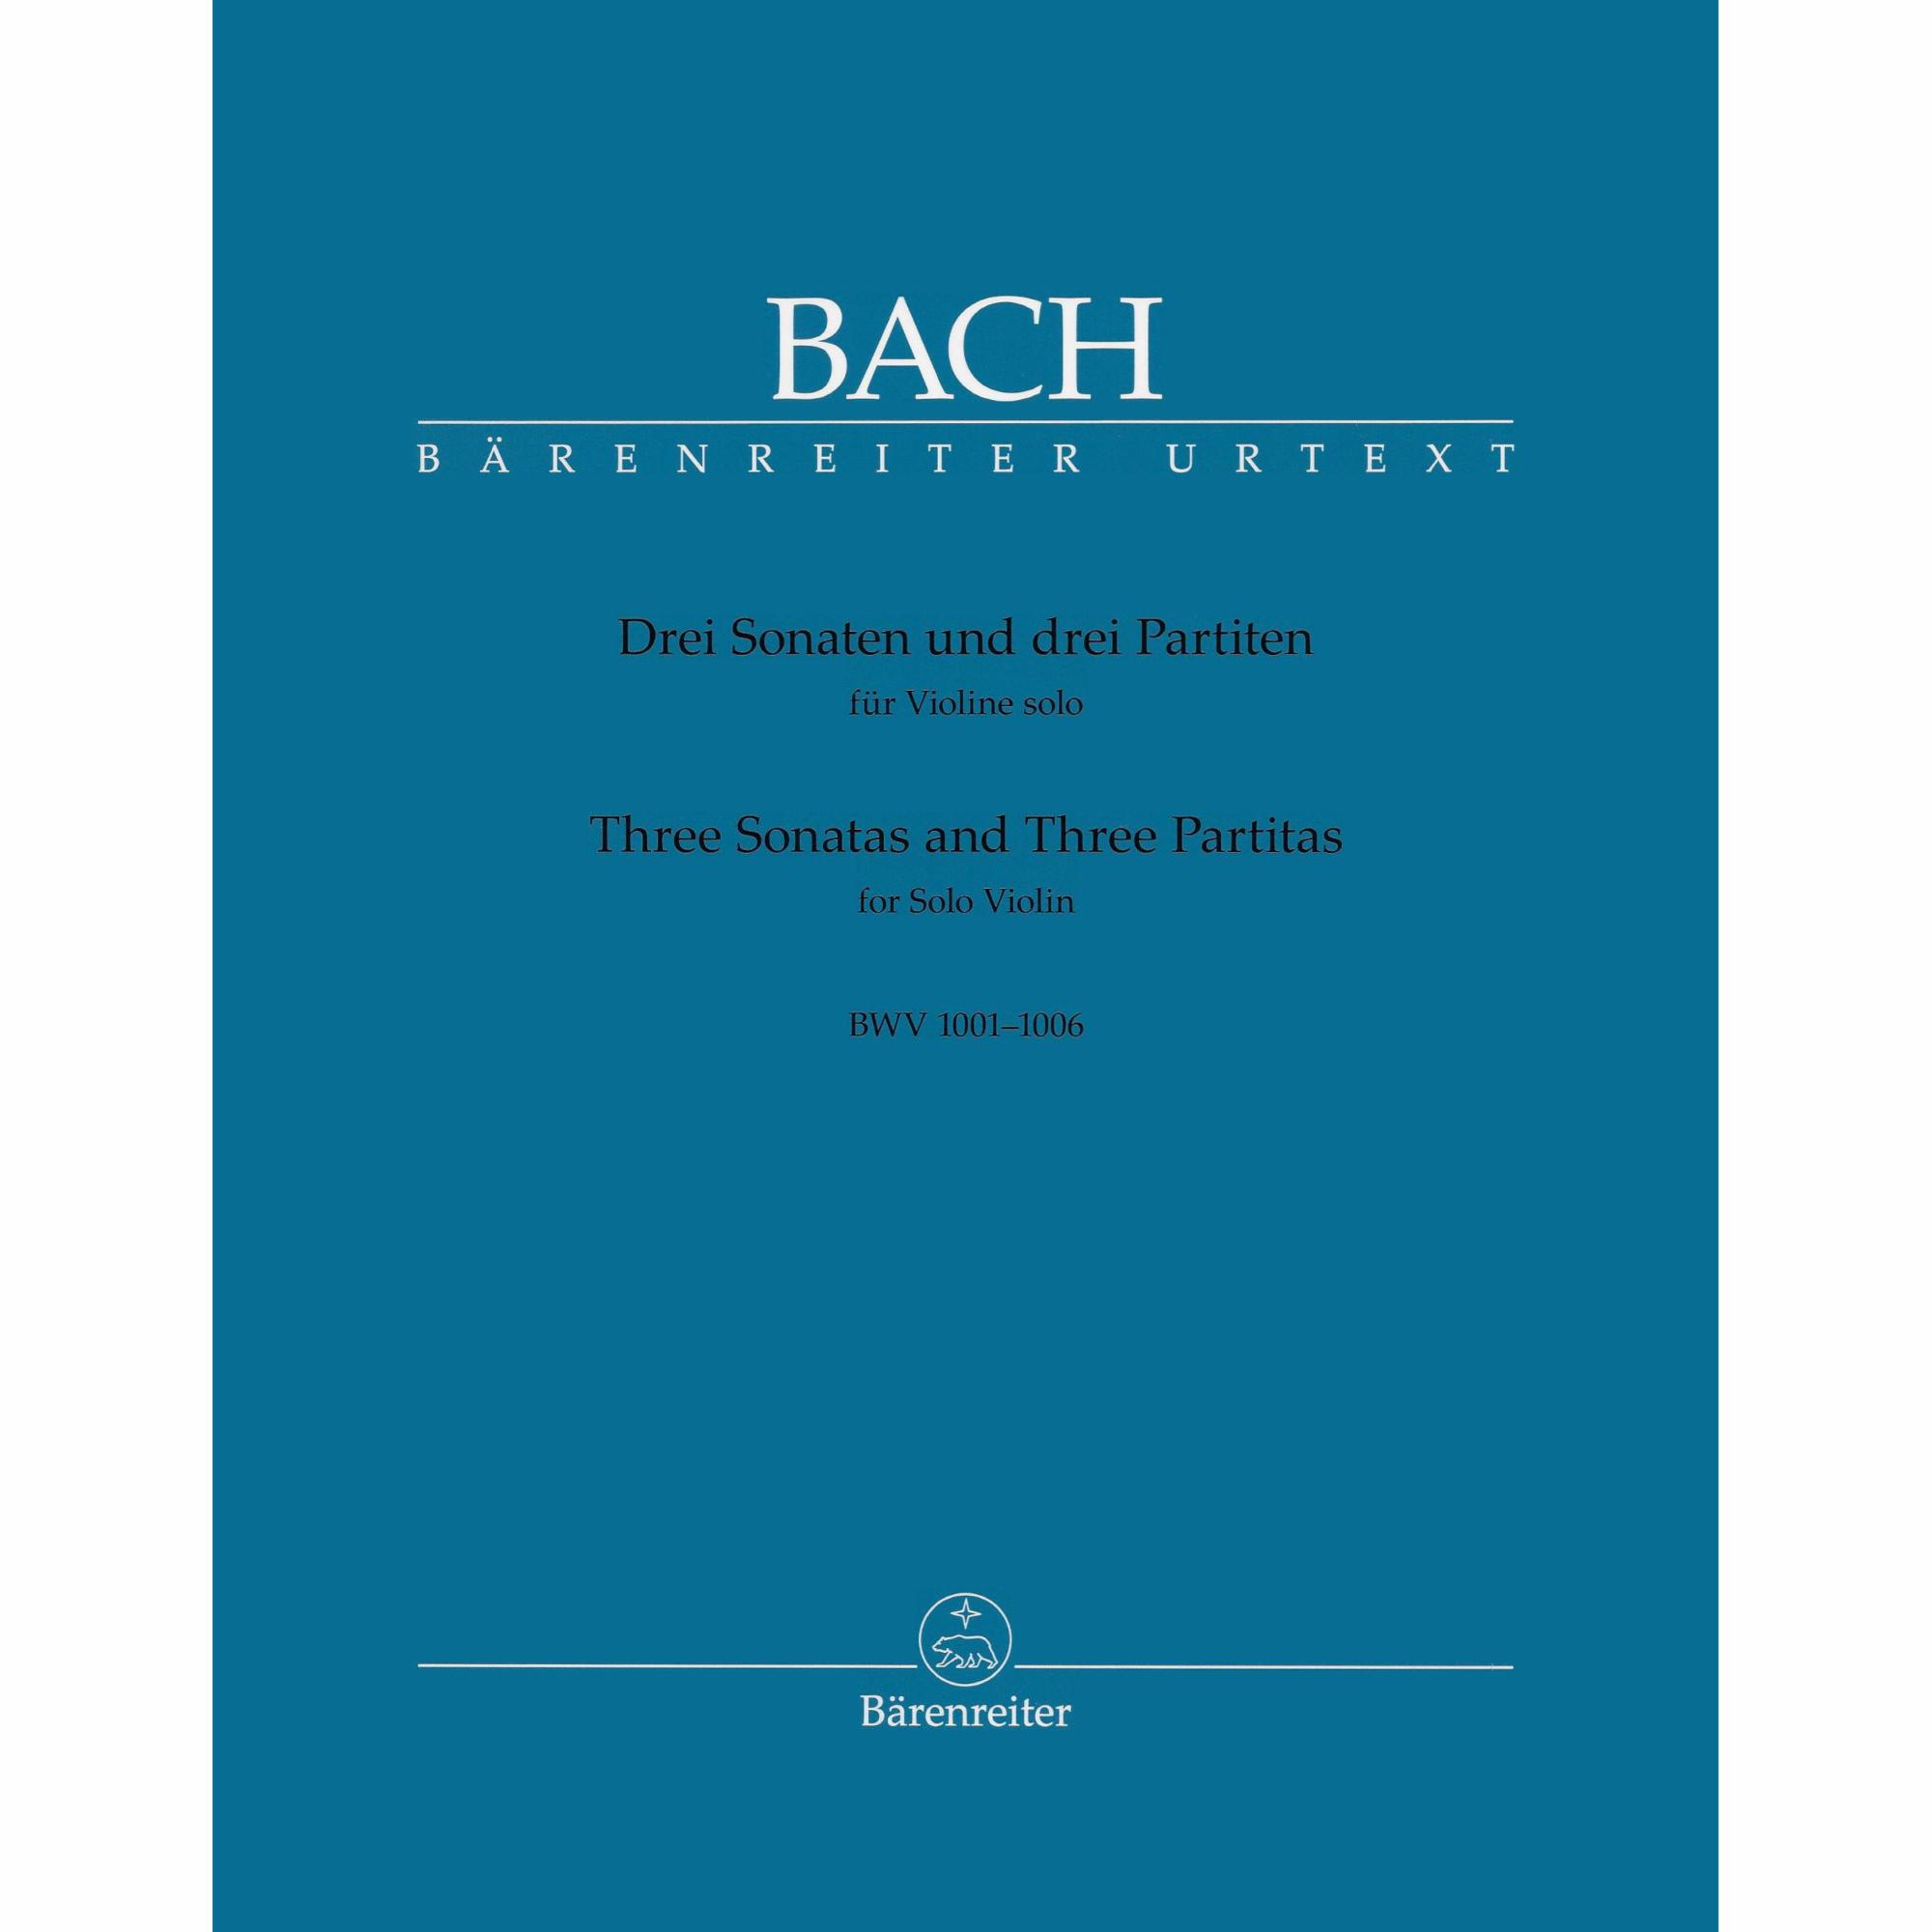 Bach -- Three Sonatas and Three Partitas, BWV 1001-1006 for Solo Violin